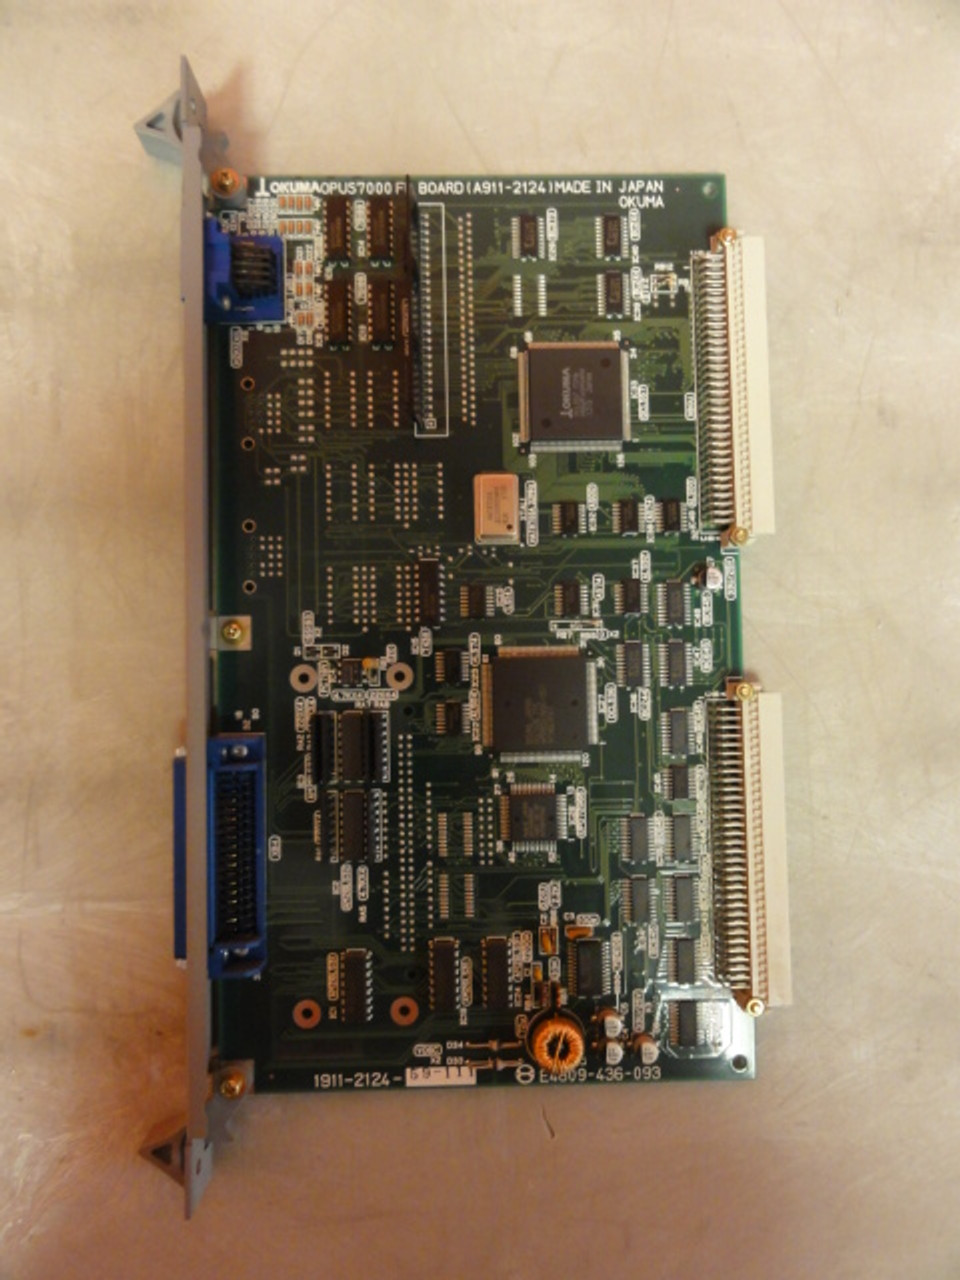 Okuma E4809-436-093 OPUS 7000 FR Board, (A911-2124)